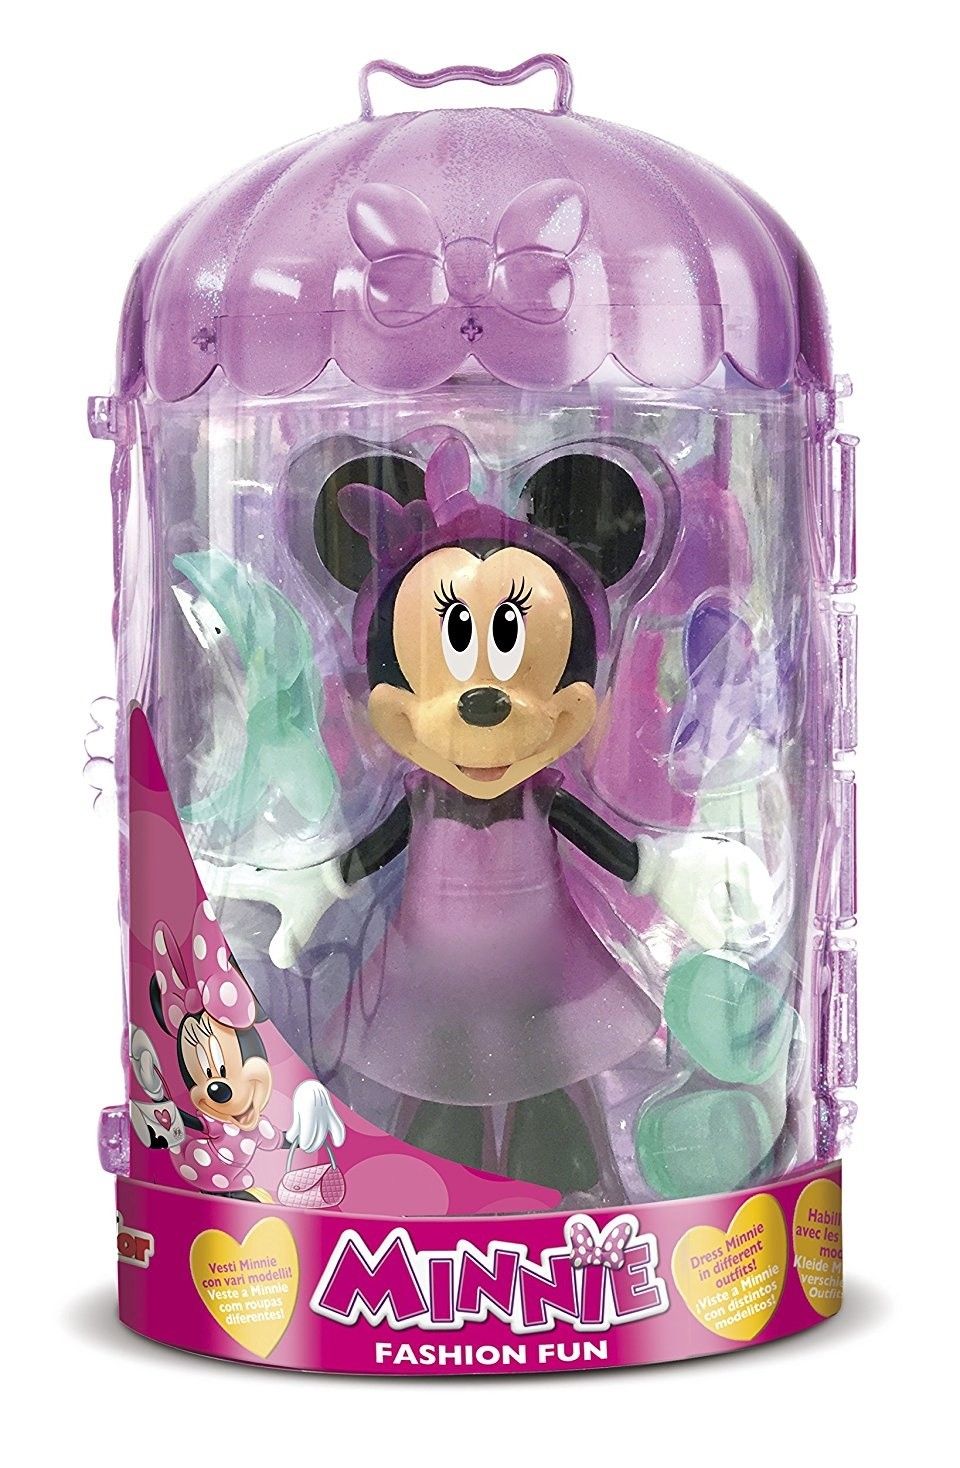 Disney Minnie Fashion Fun, Figurine Toys